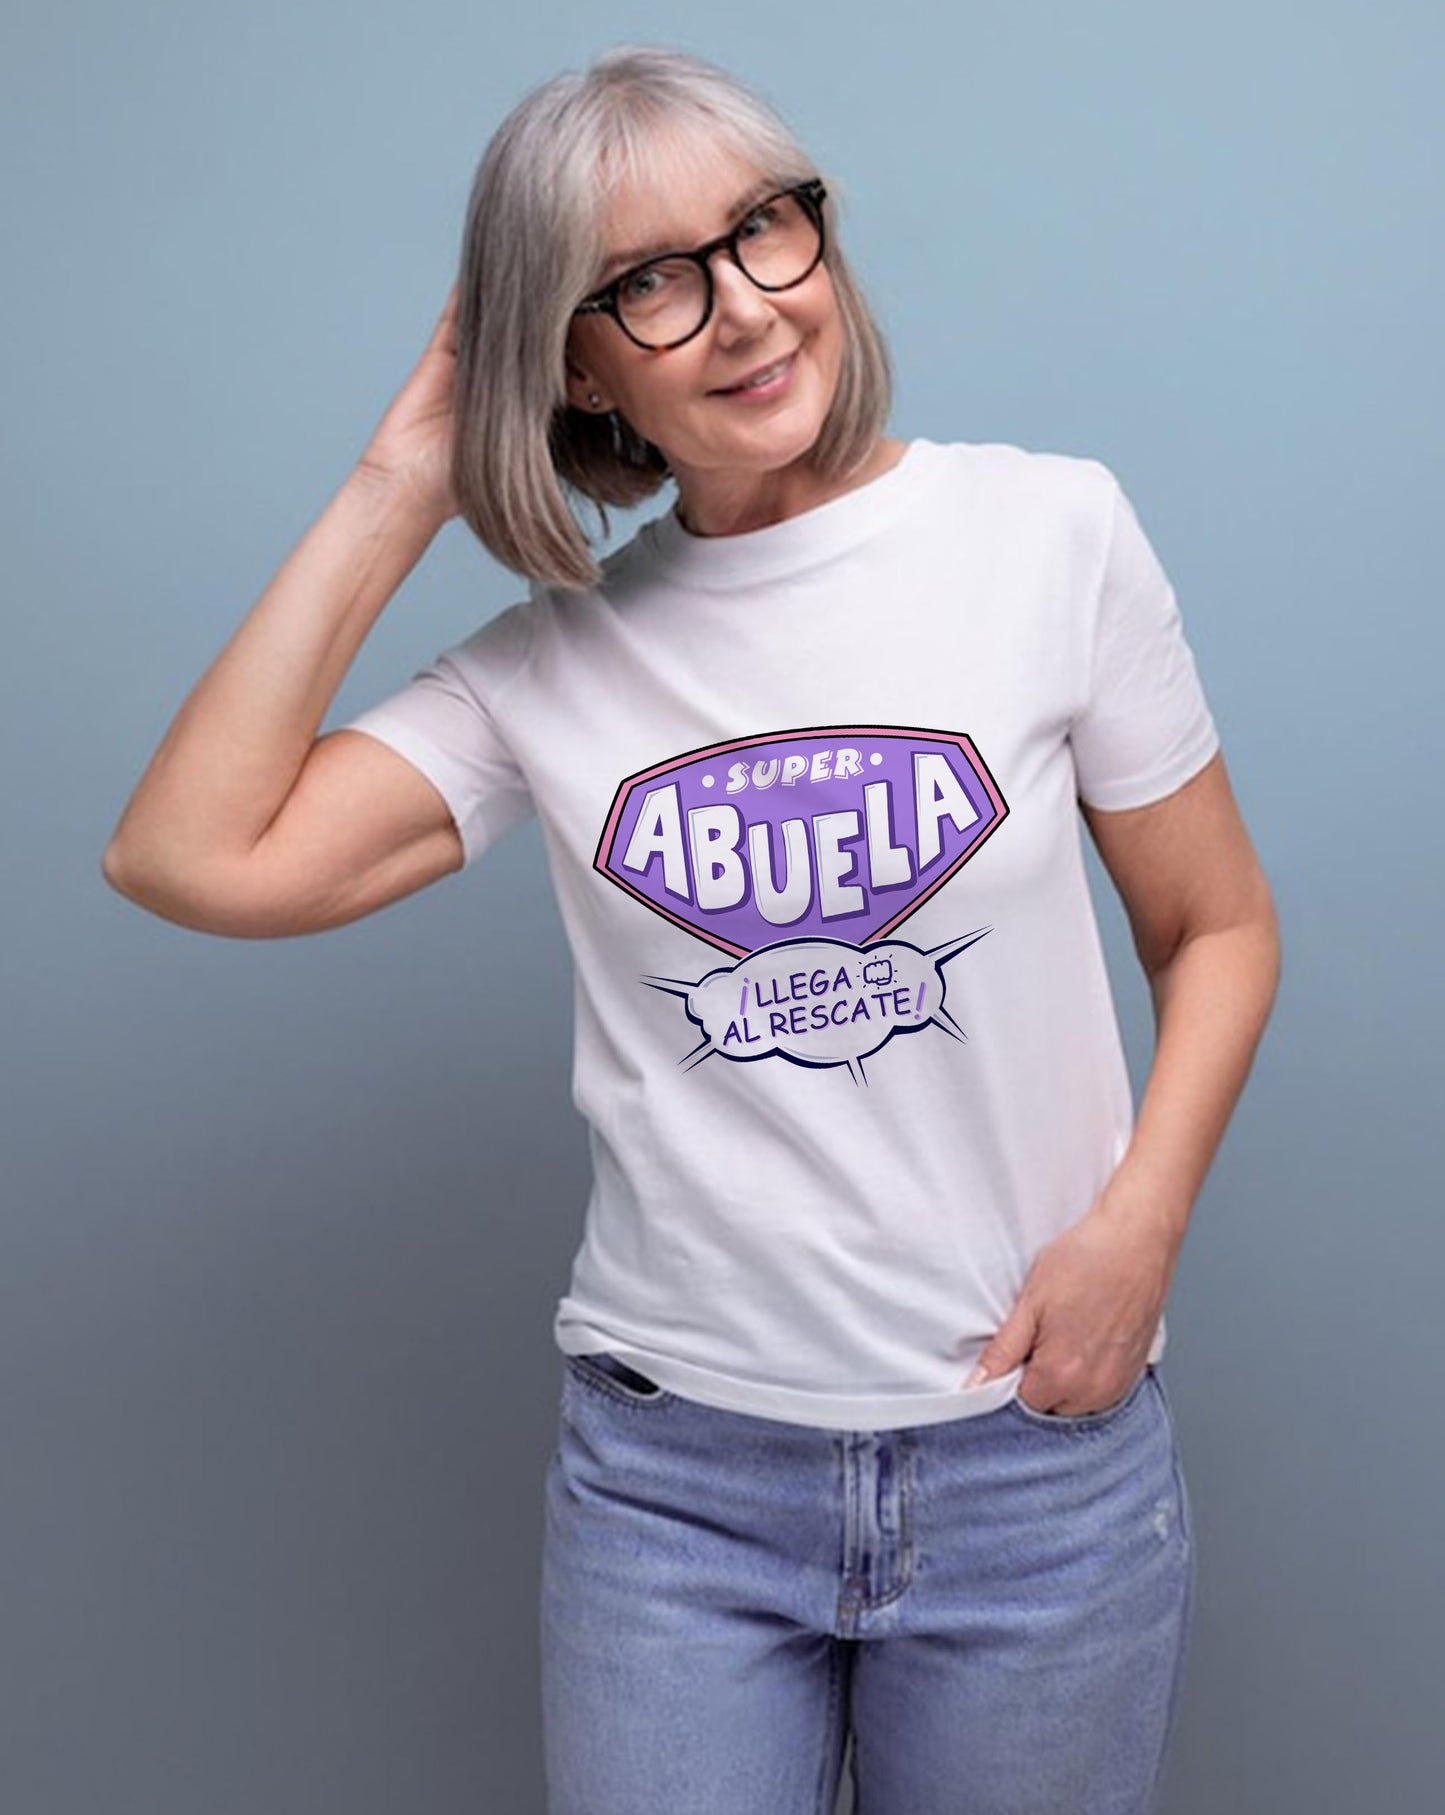 Camiseta personalizada Super abuela al rescate